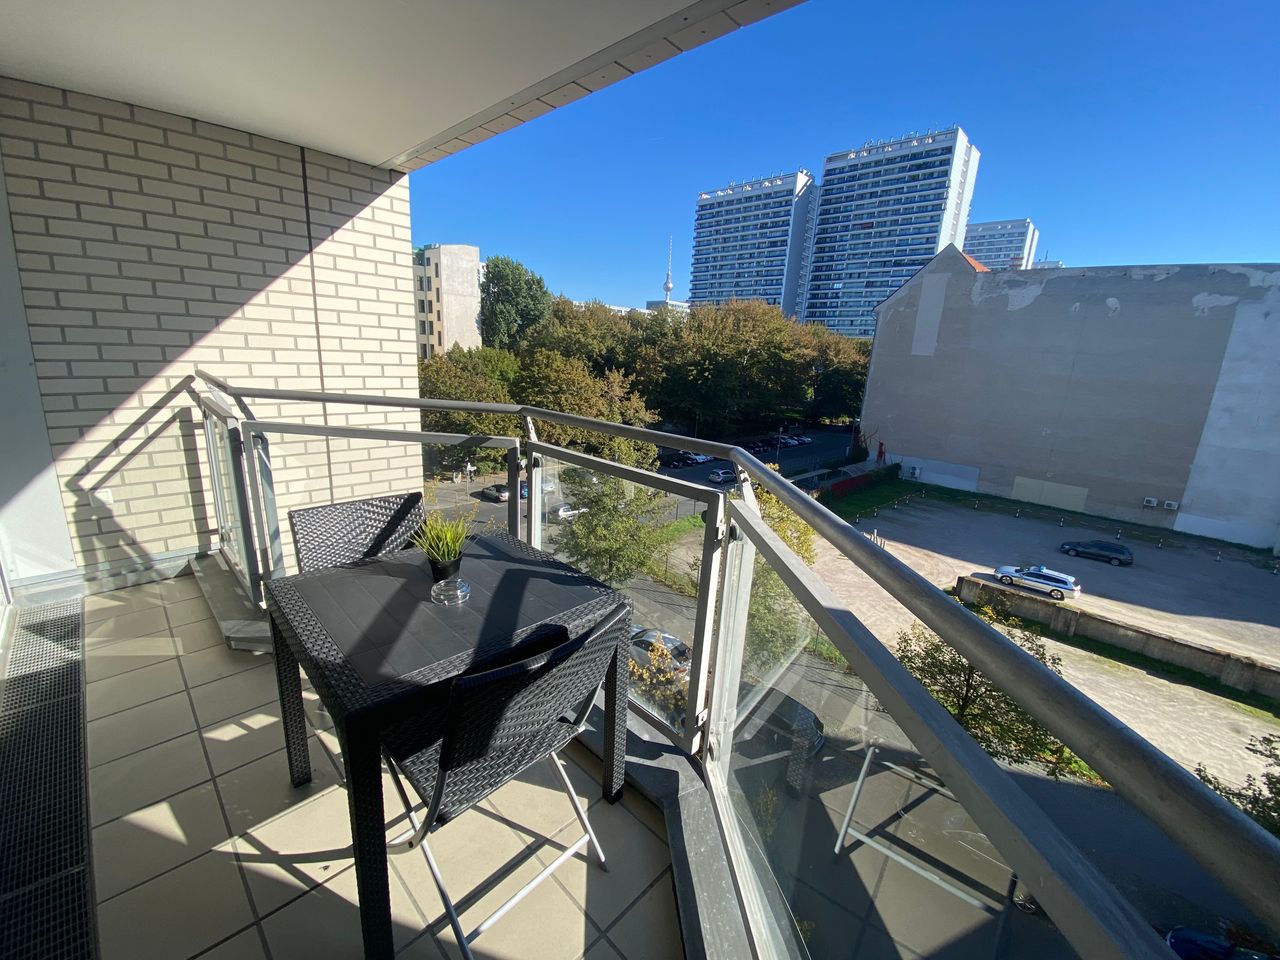 2Room City-Apartment balcony / free parking & wifi  Charlottenstr. / Modernized incl. 24hDoormenservice